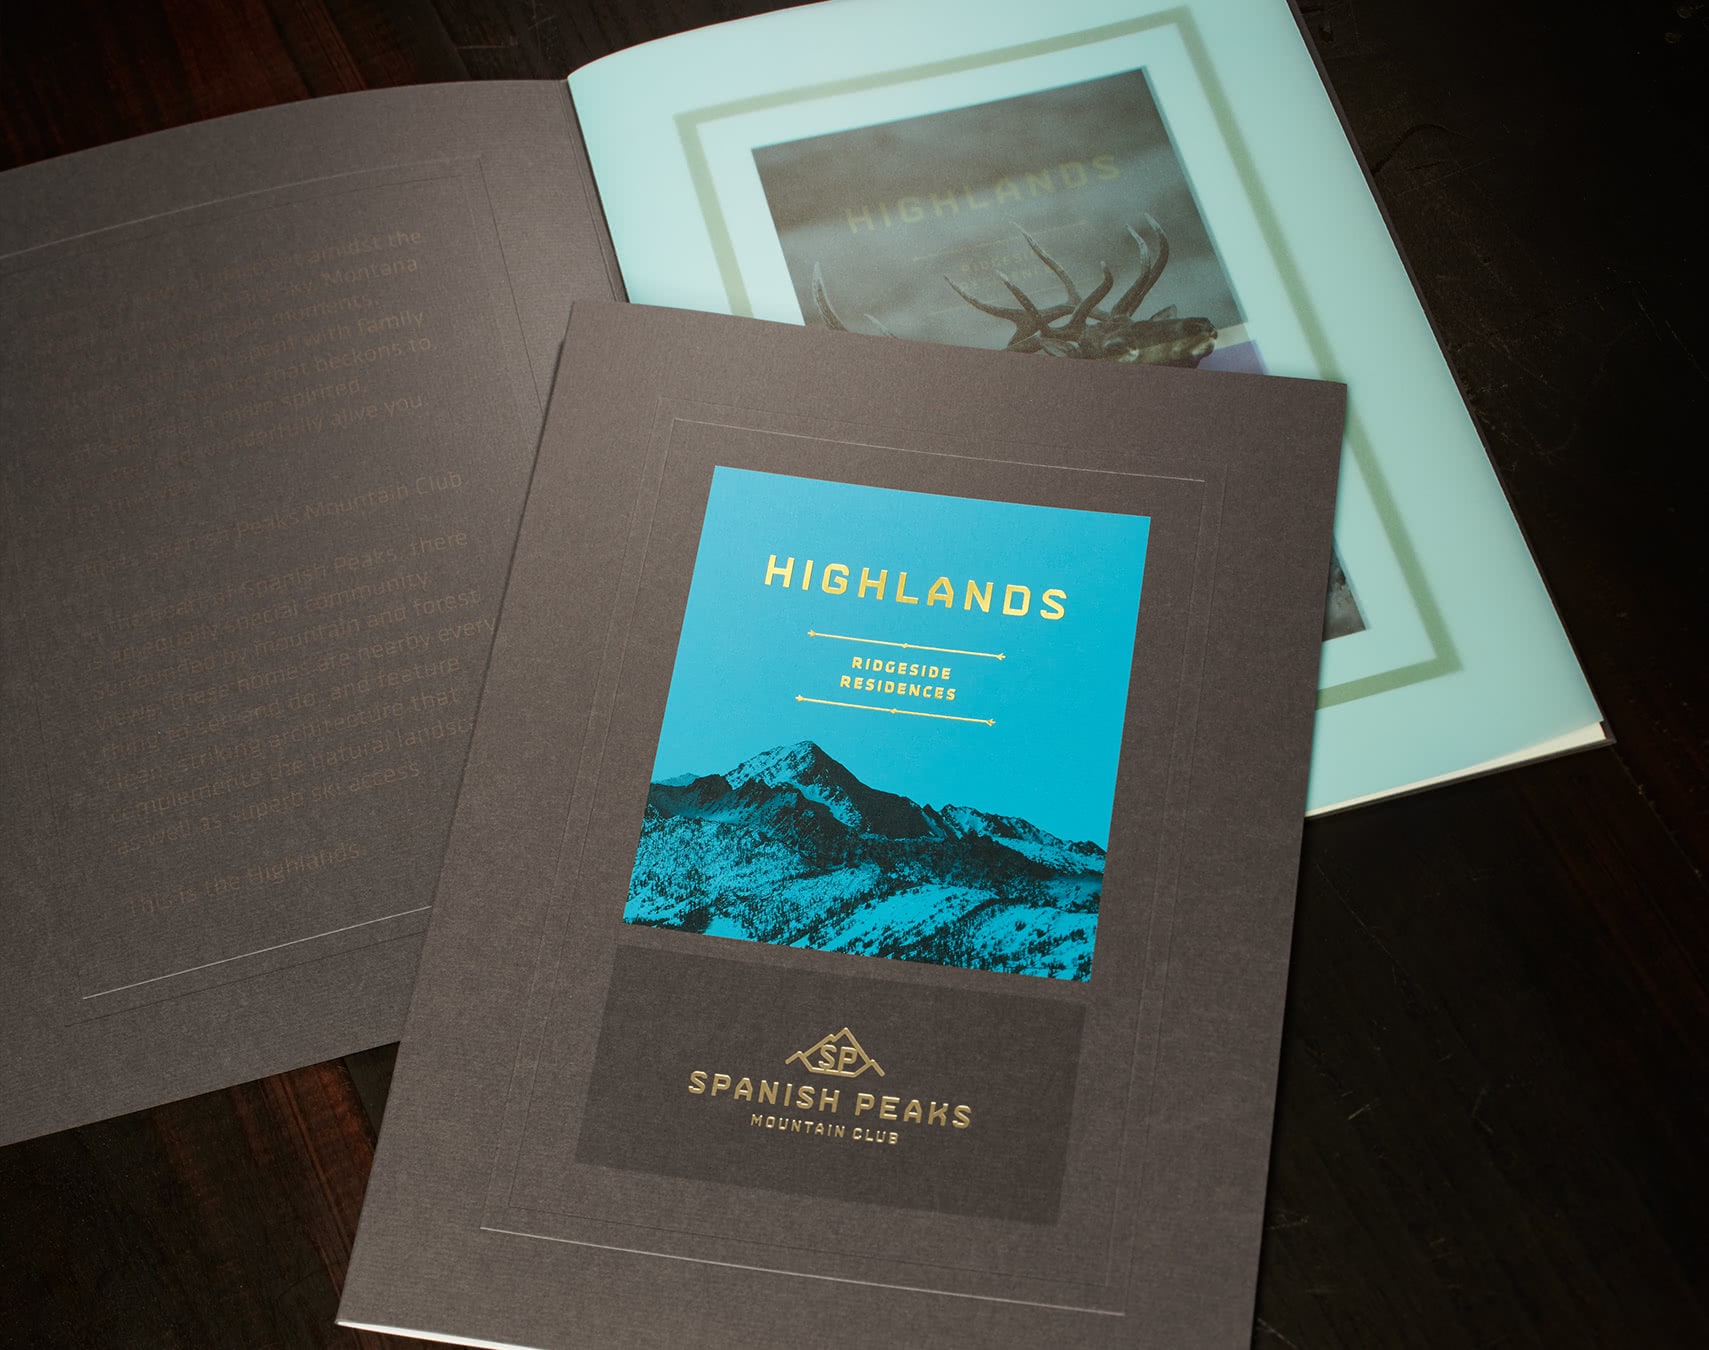 Spanish Peaks highlands brochure cover